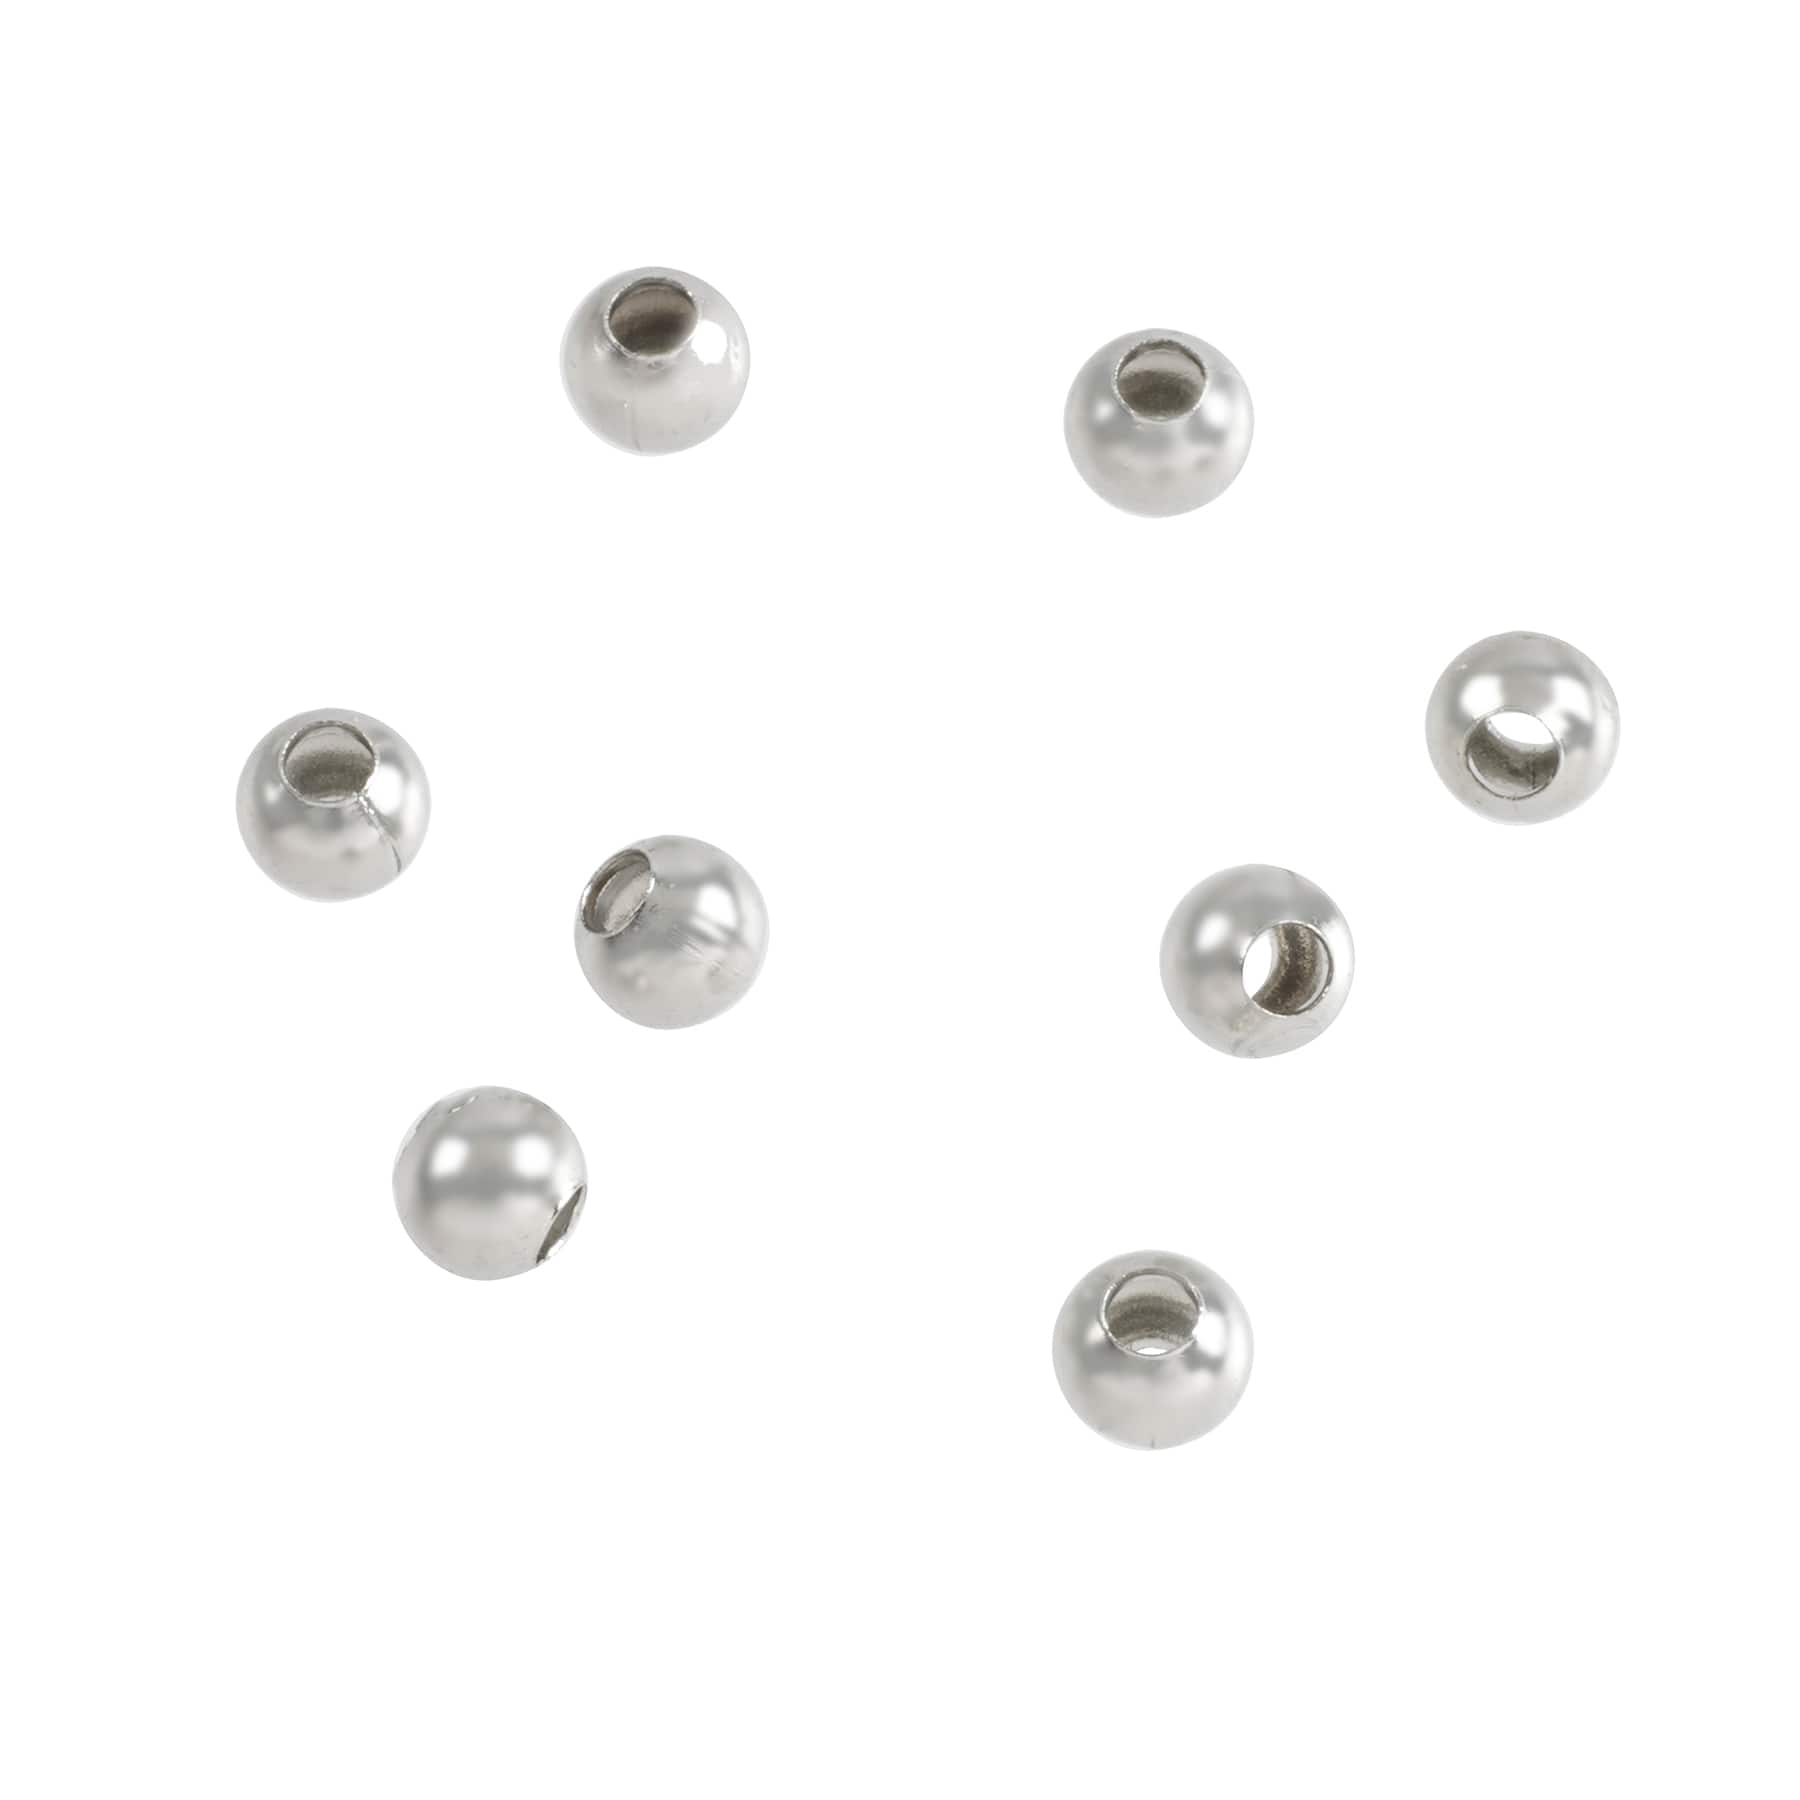 12 Packs: 200 ct. (2,400 total) Premium Metals 3mm Rhodium Spacer Beads by Bead Landing&#x2122;